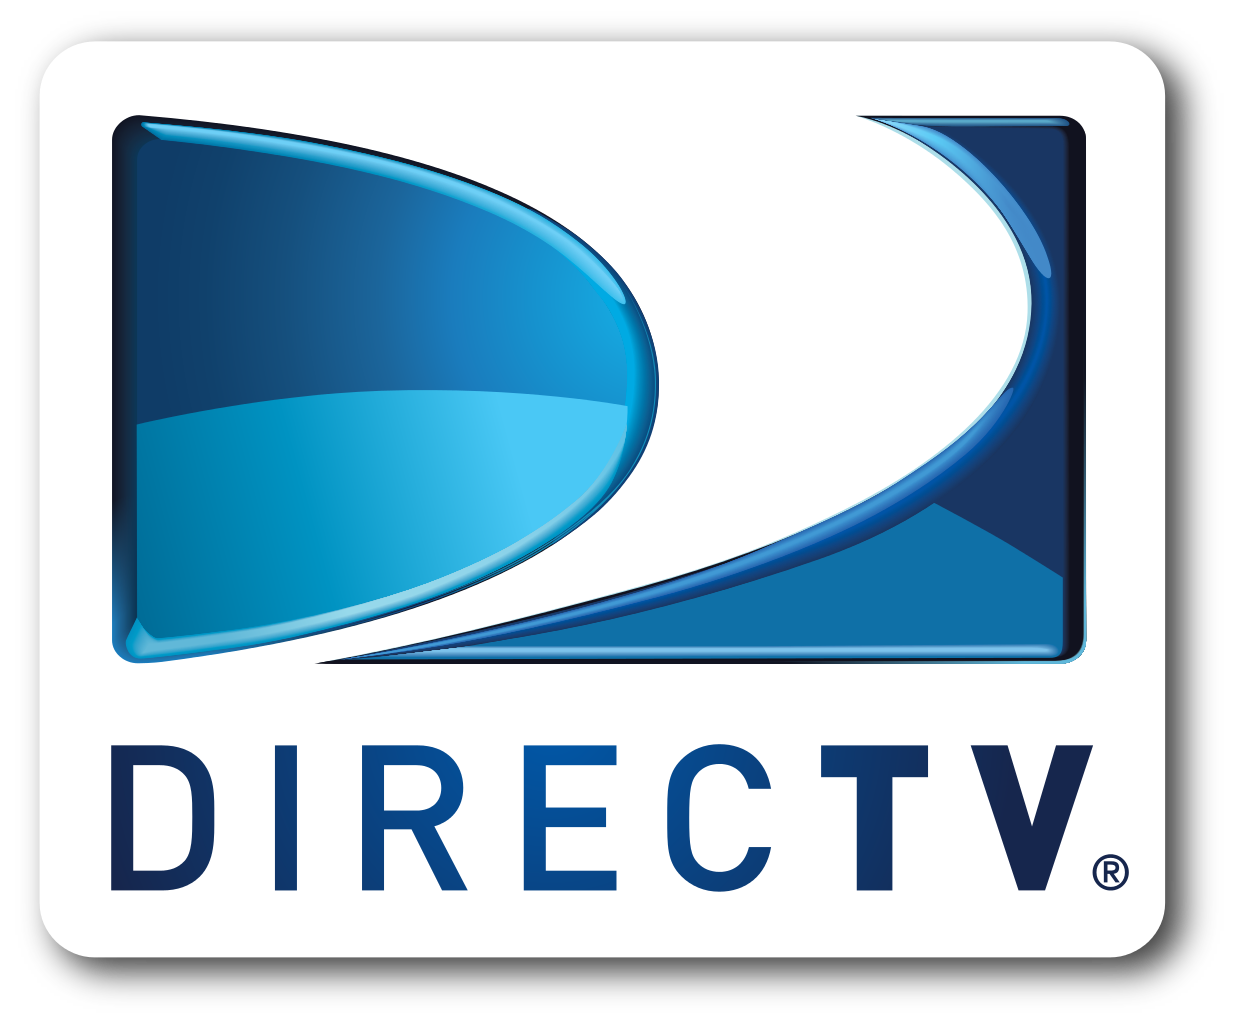 File:Direct tv channel.svg - Wikipedia